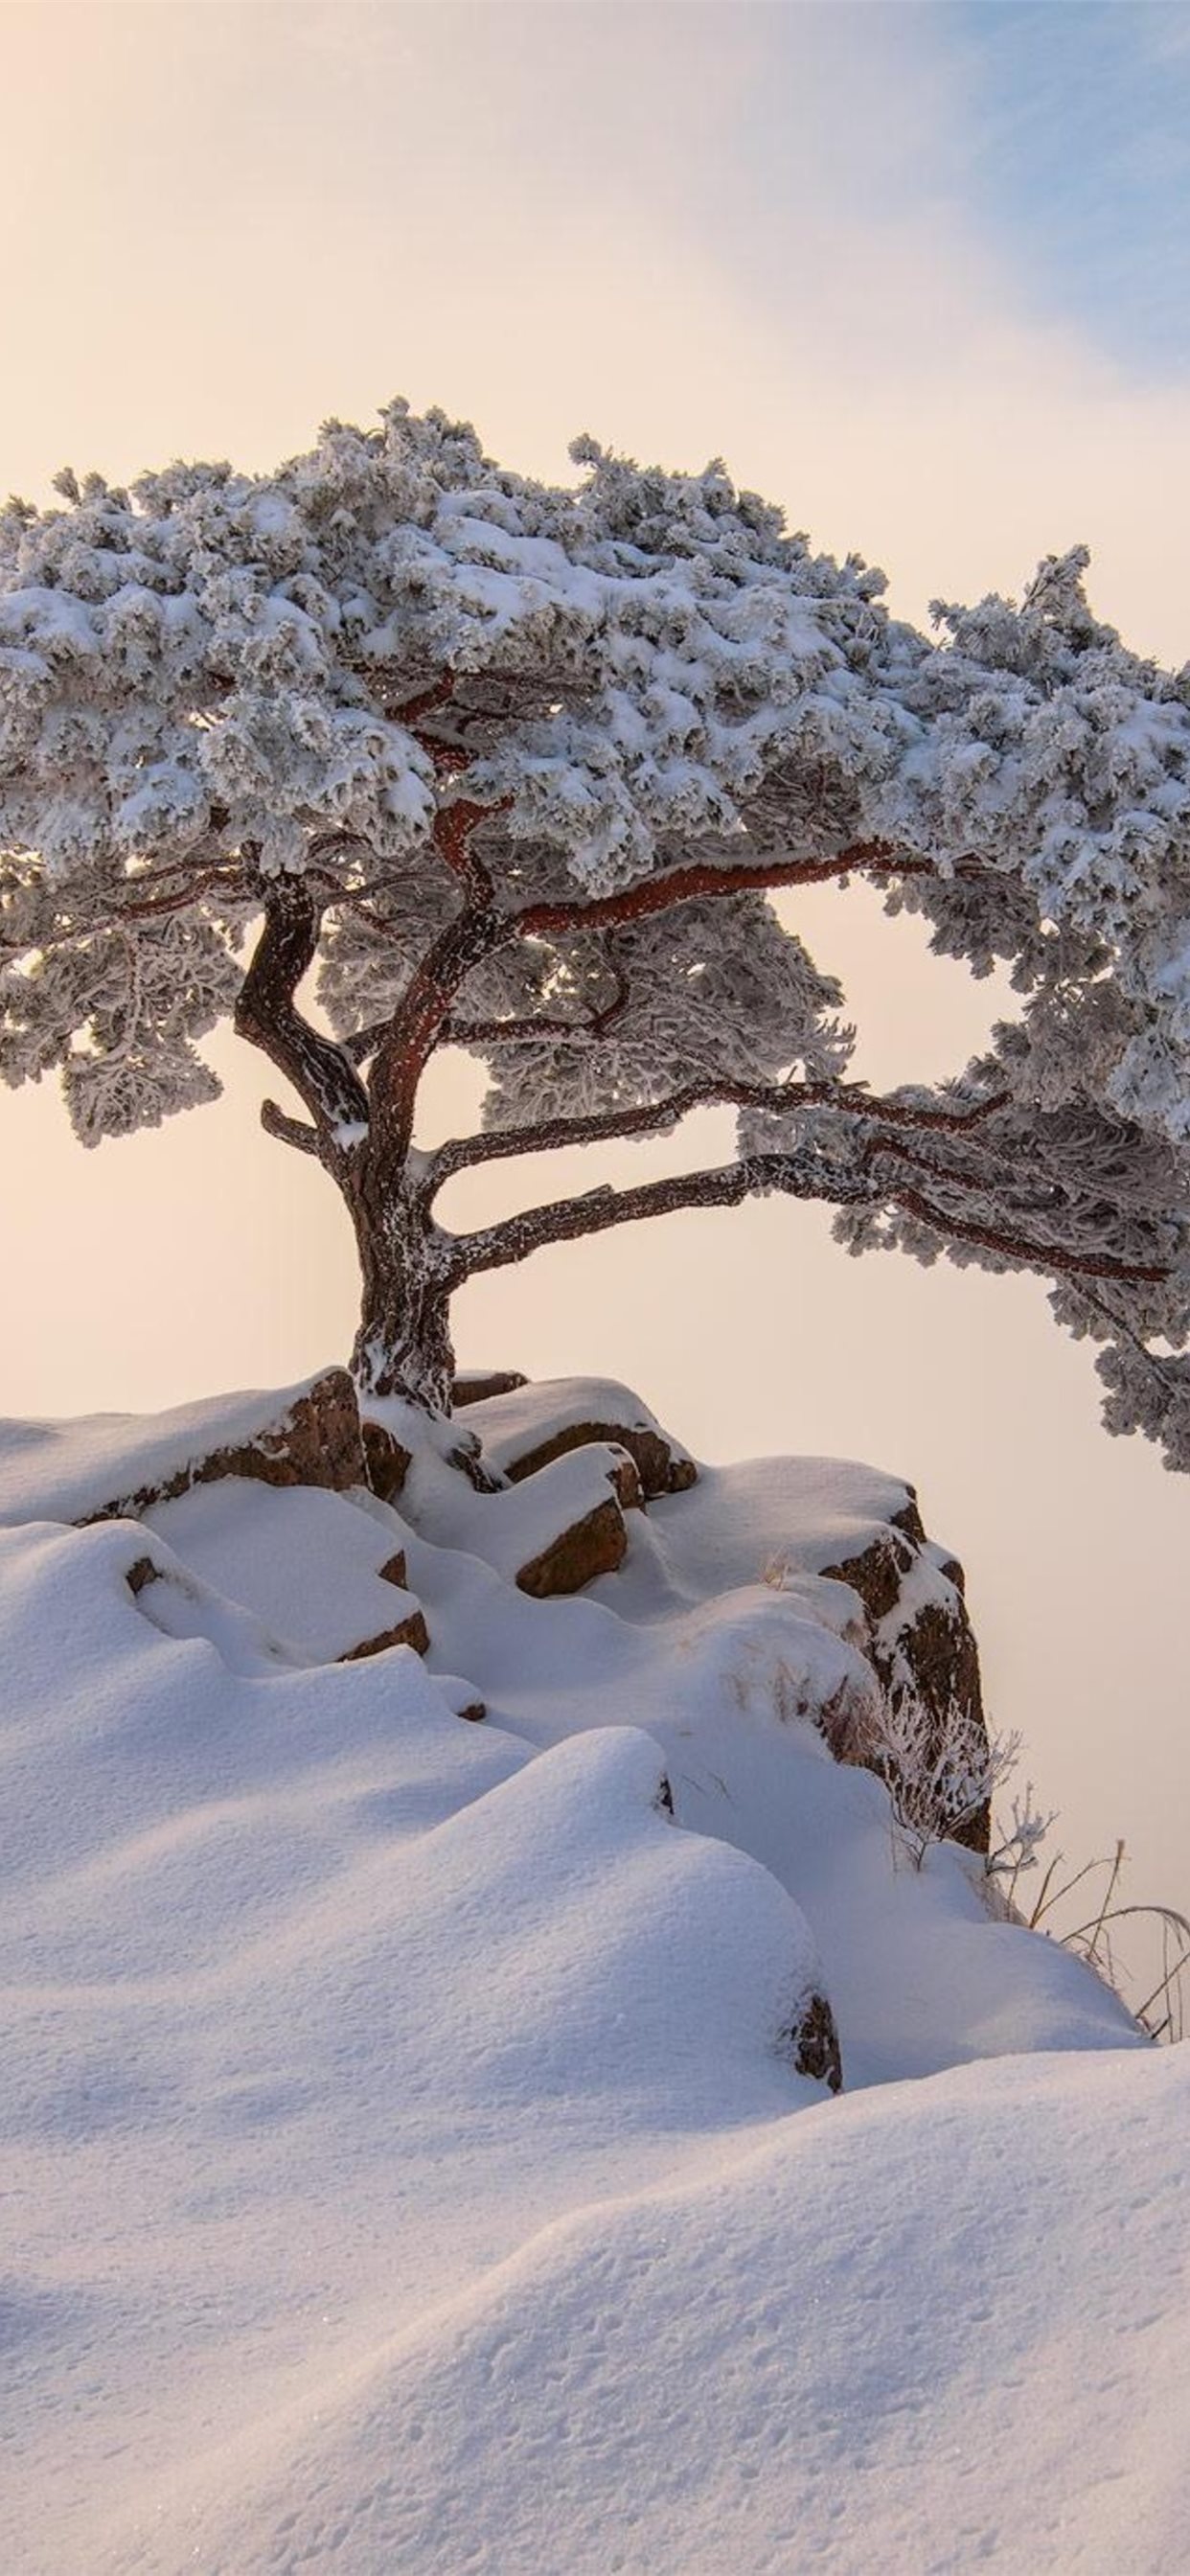 Snow Covered Landscape Free Stock Photo  picjumbo